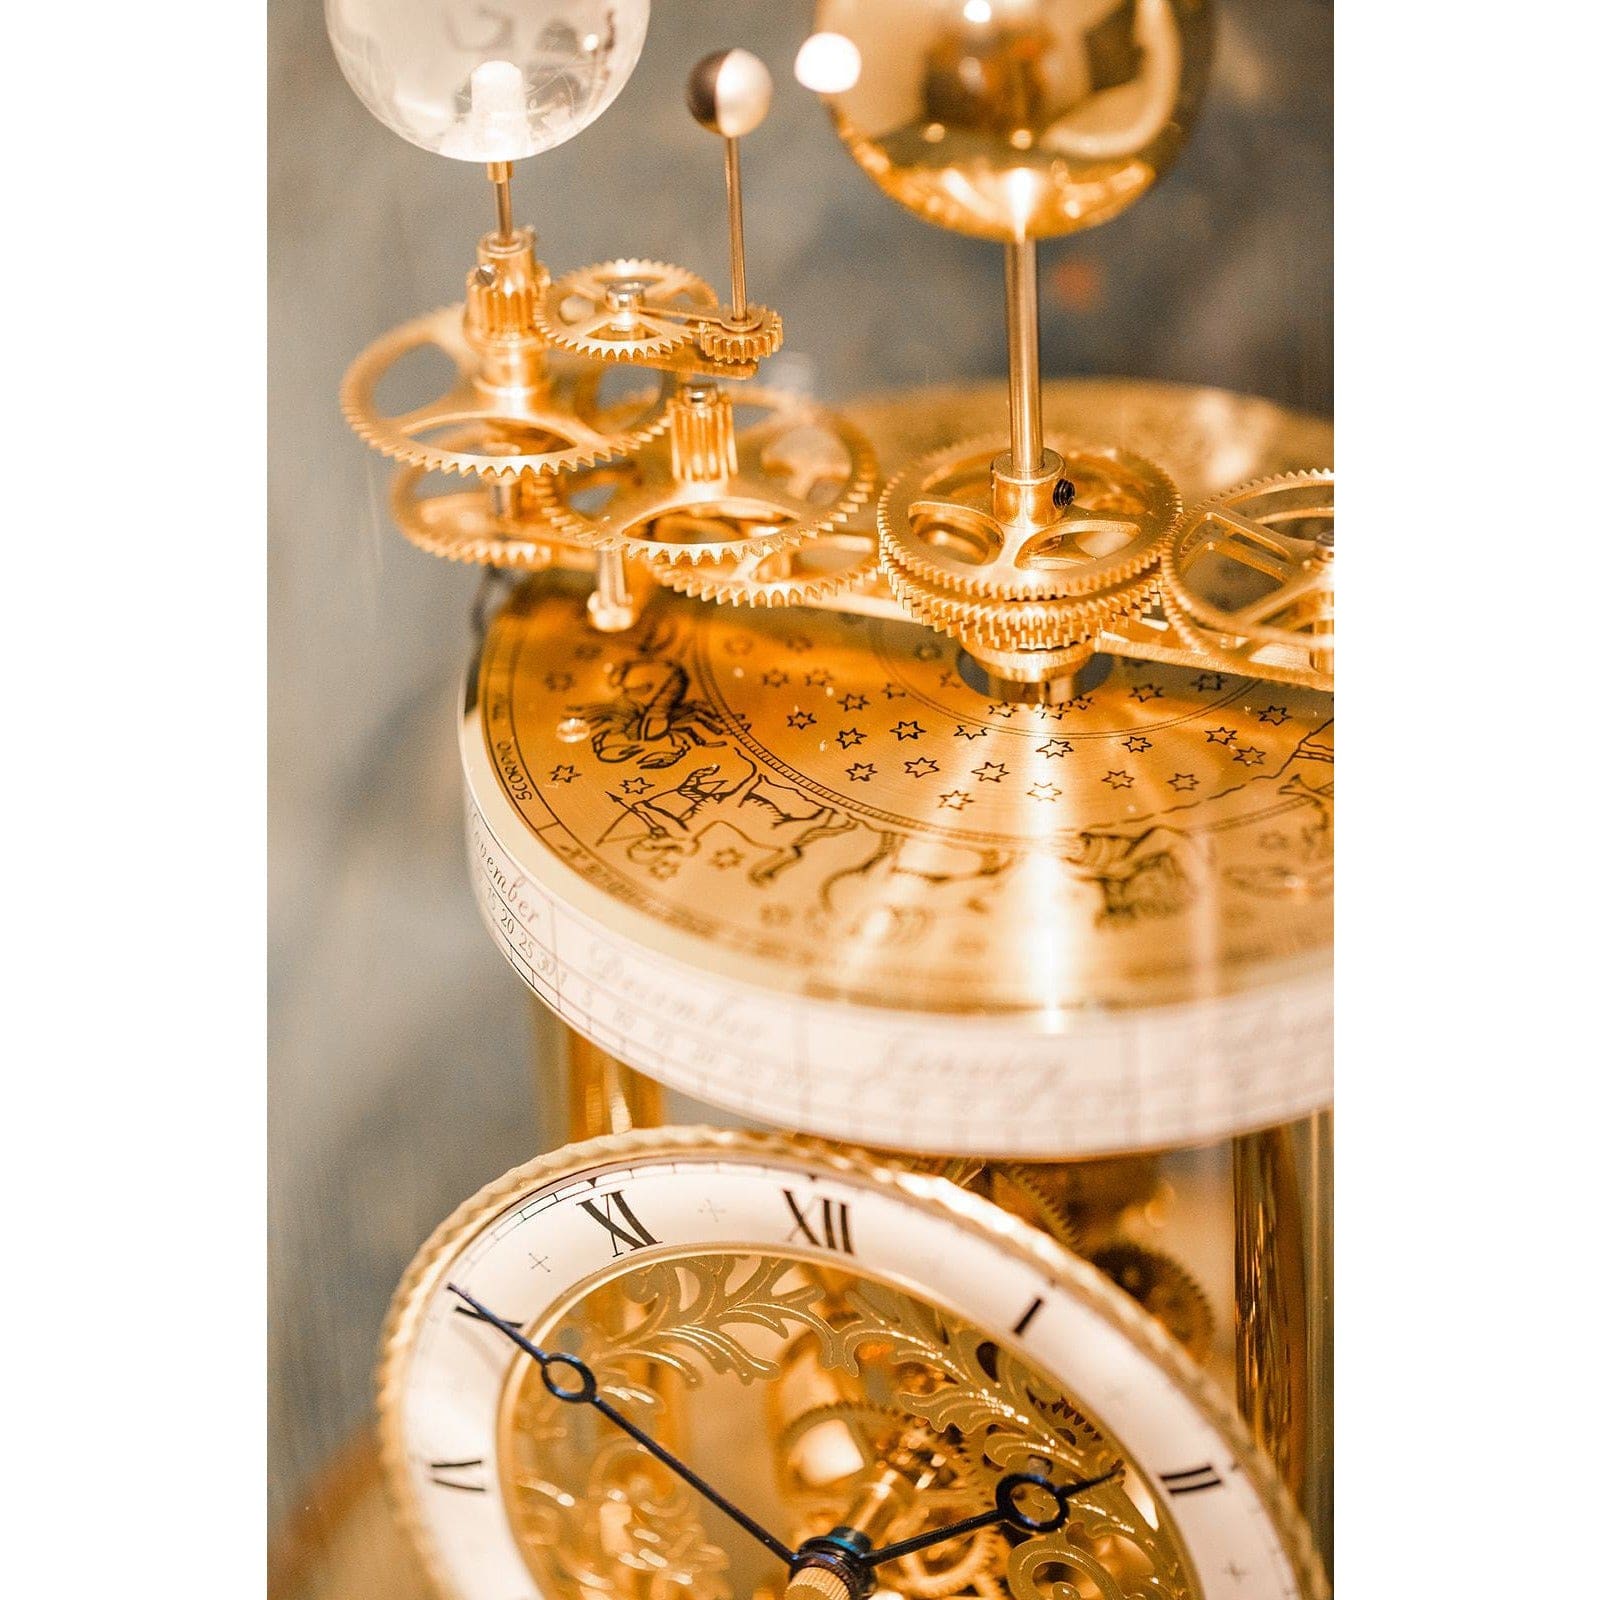 hermle-mantel-clock-astrolabium-quartz-mahogany-22836072987 – 2.0